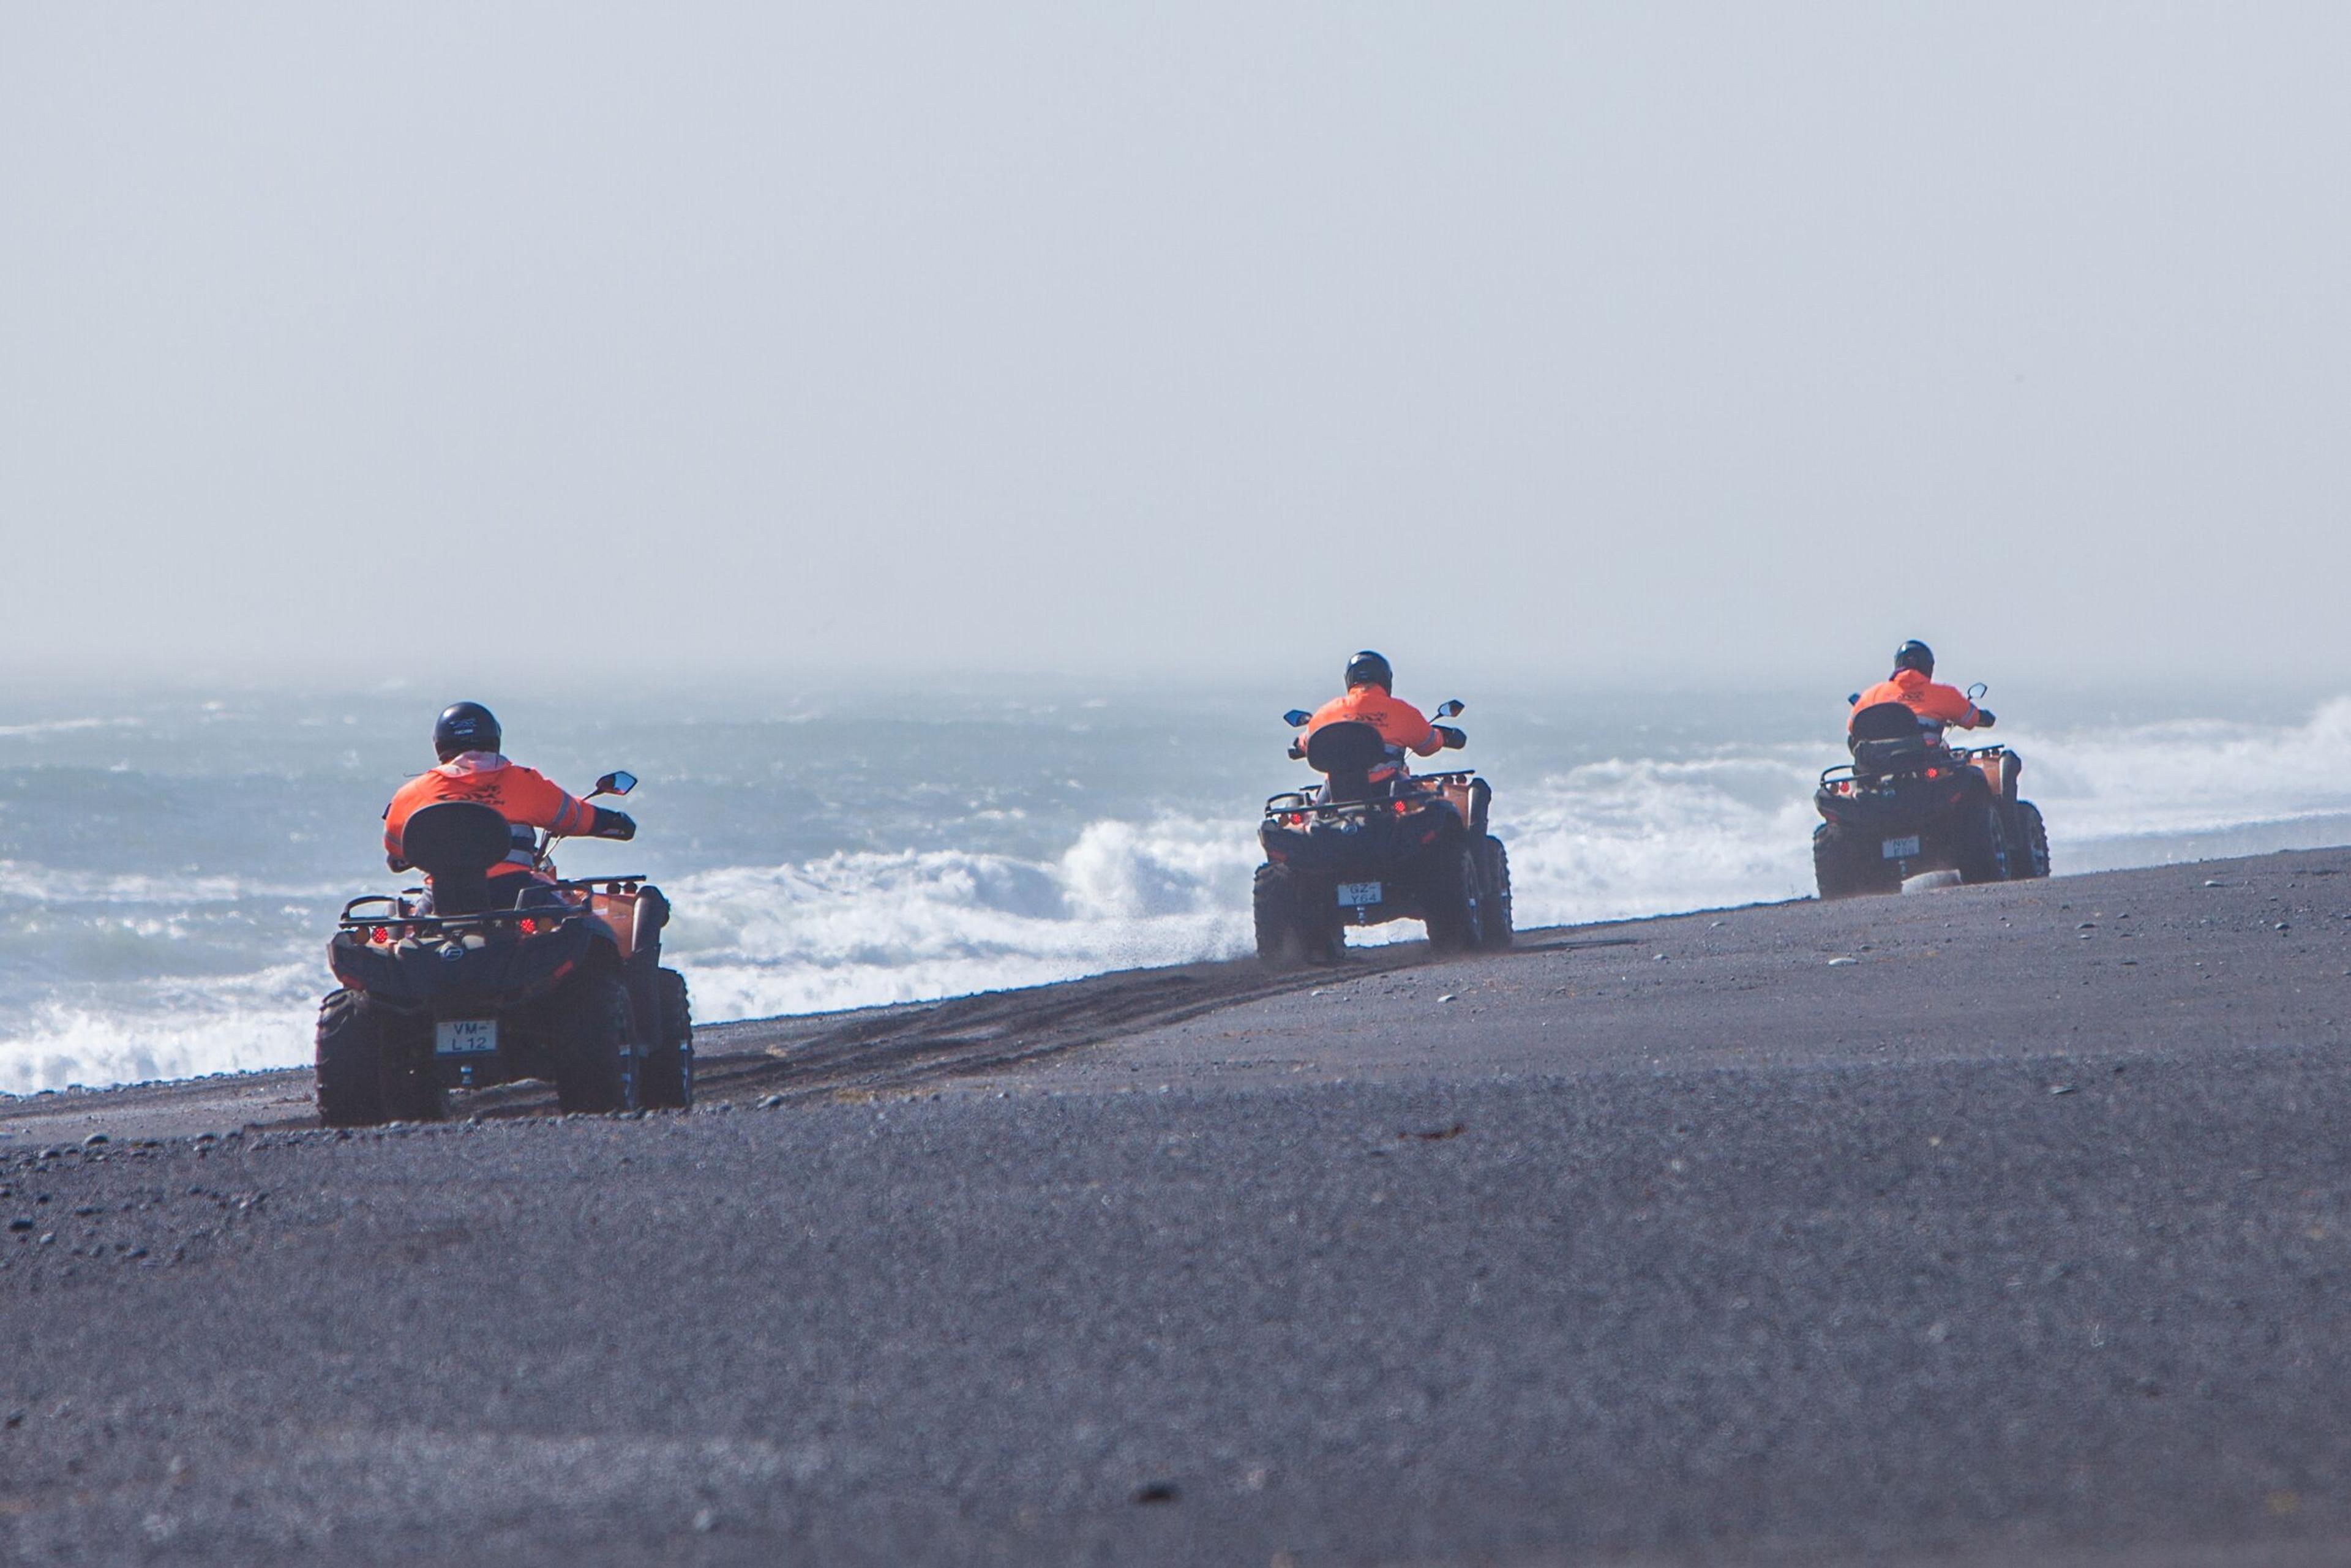 atv bikes traveling through a black sand beach in Iceland.